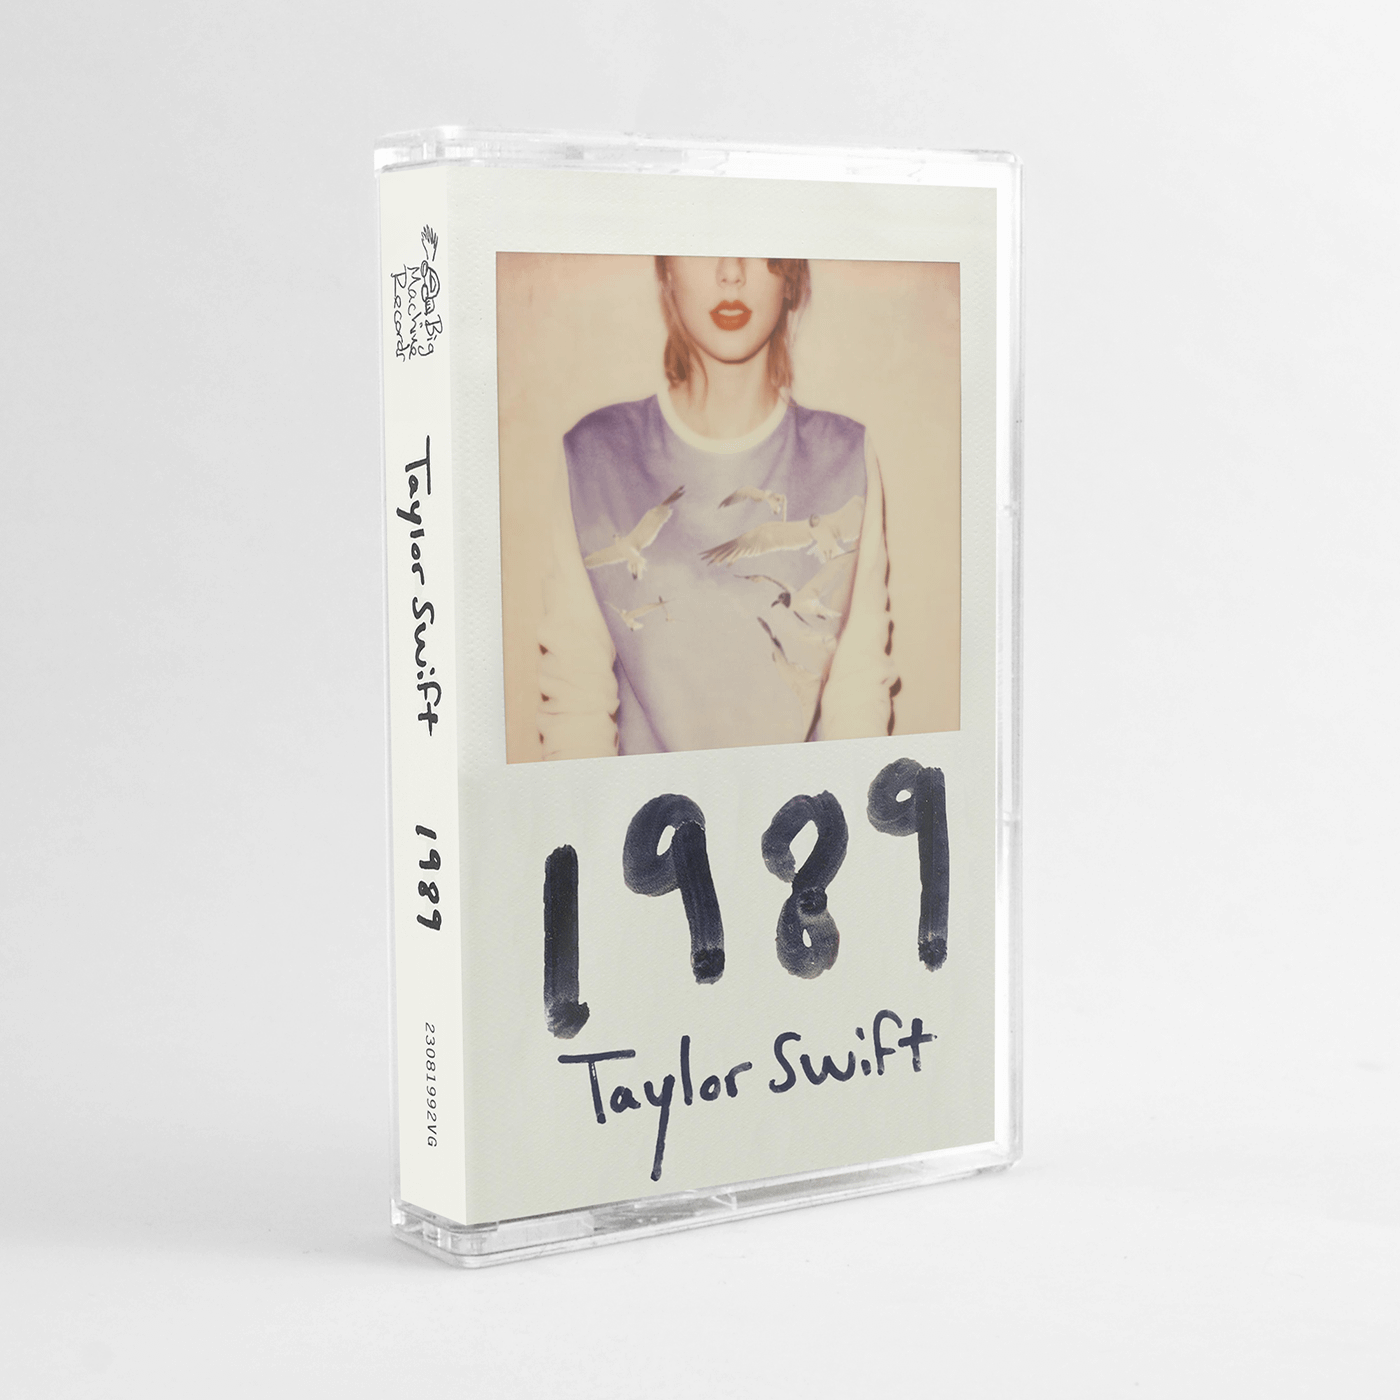 Taylor Swift - 1989 Deluxe : CASSETTE